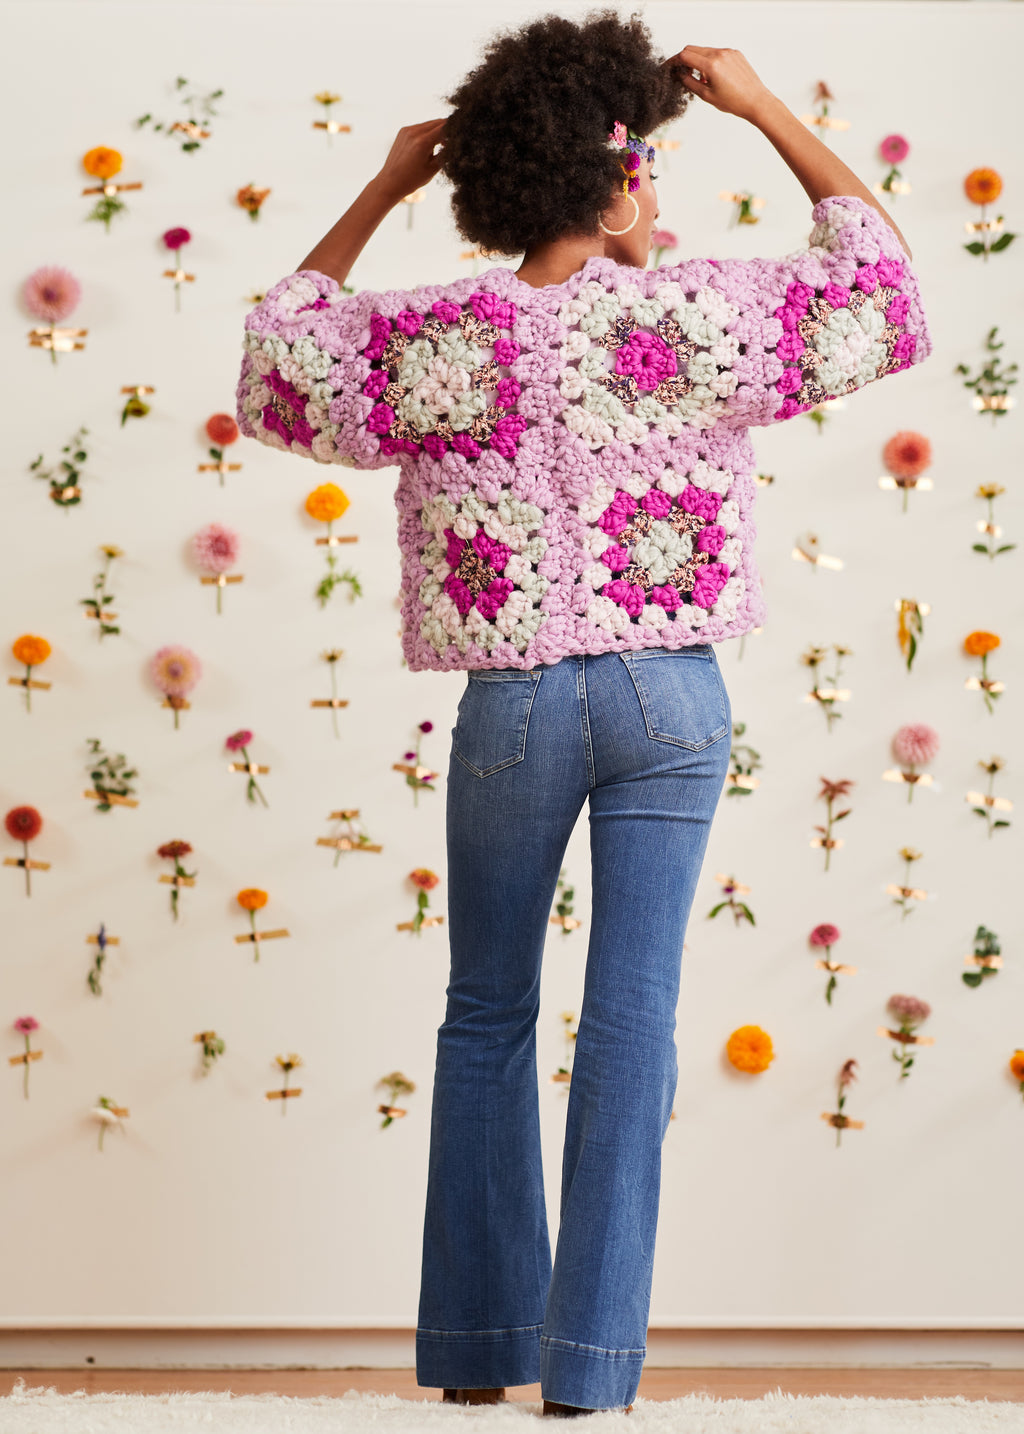 Maisie Crochet Cardi Sizes 3 & 4 Kit